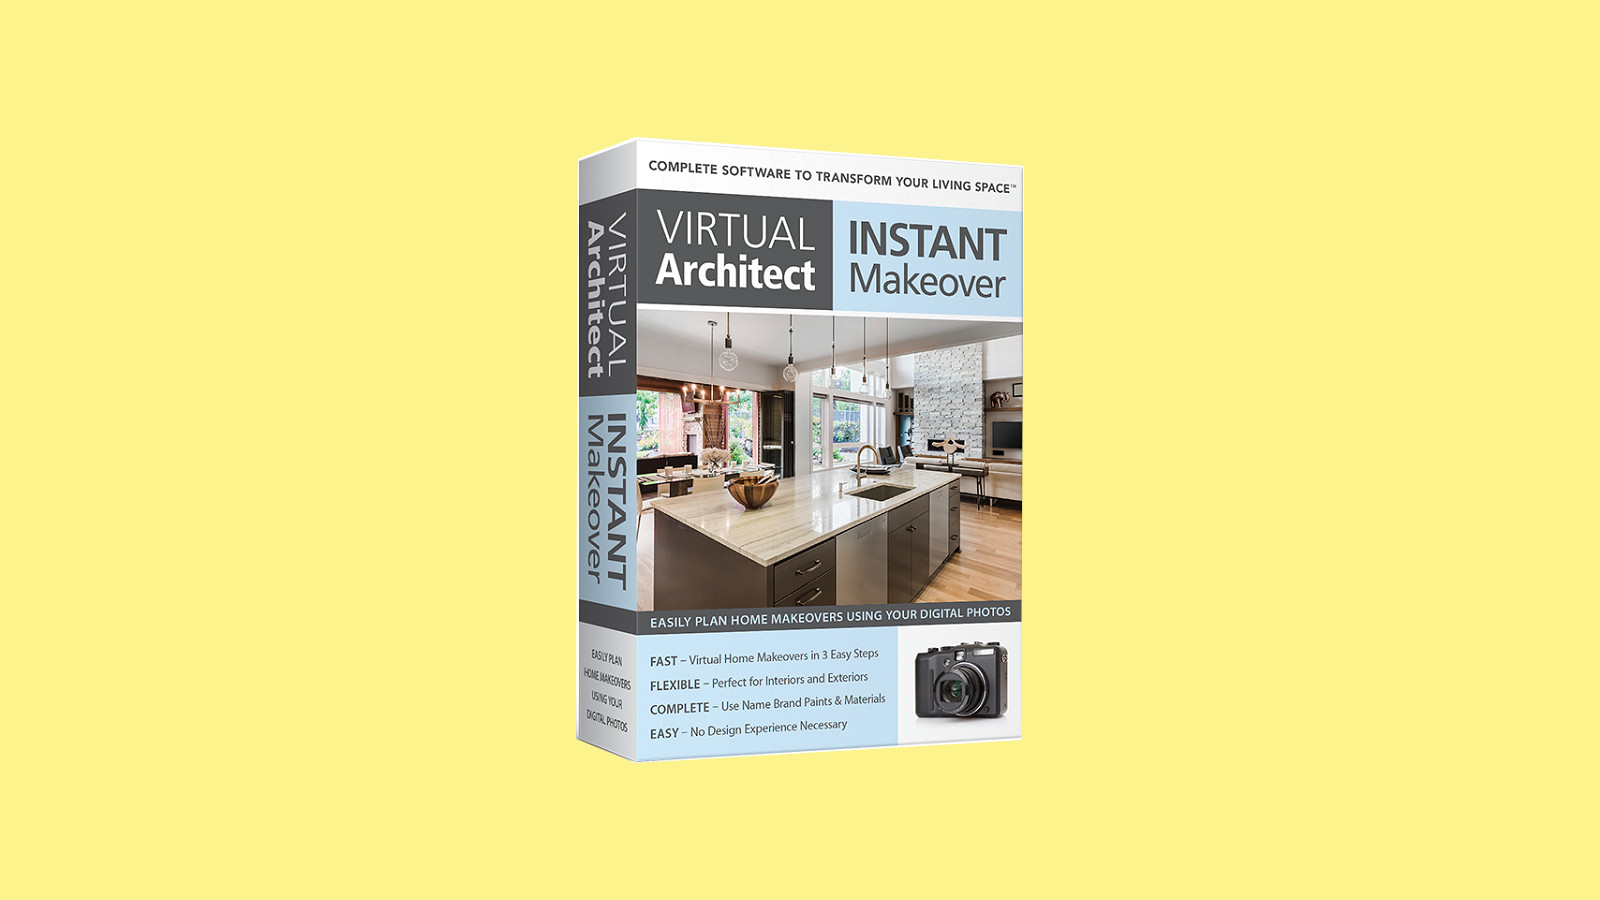 Virtual Architect Instant Makeover 2.0 CD Key, $17.63